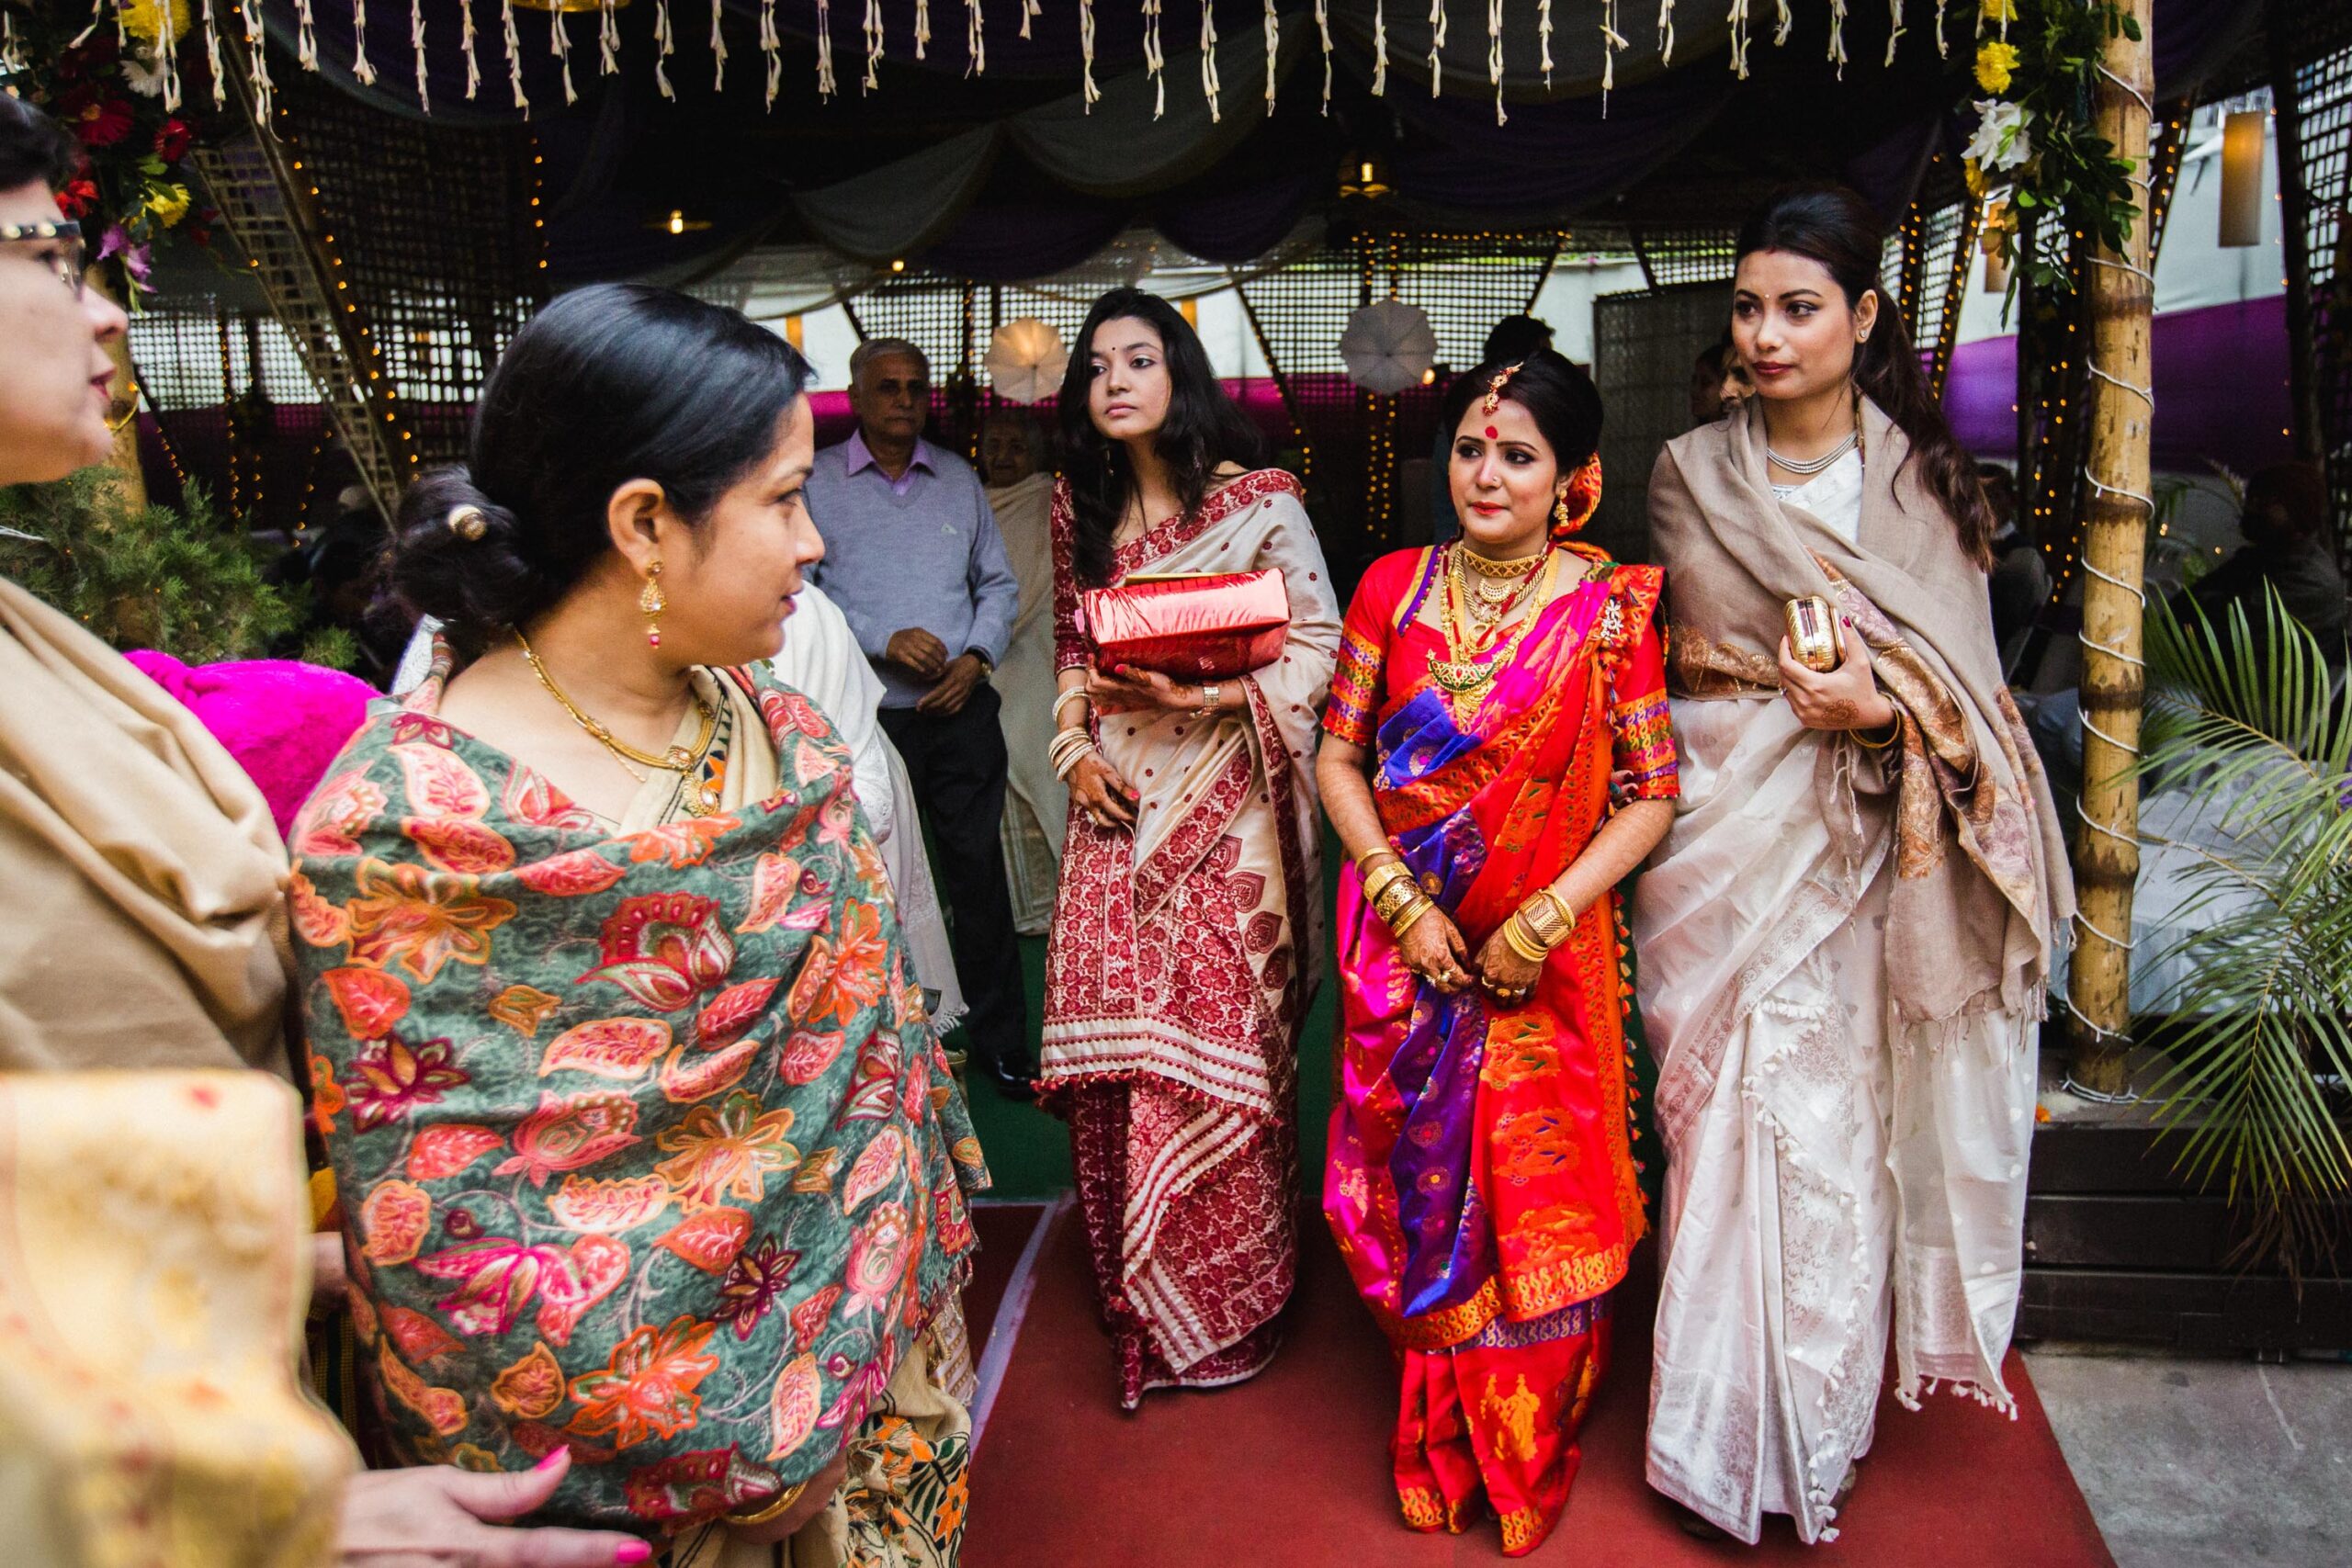 himakshi assamese wedding photography guwahati by dropdstudio